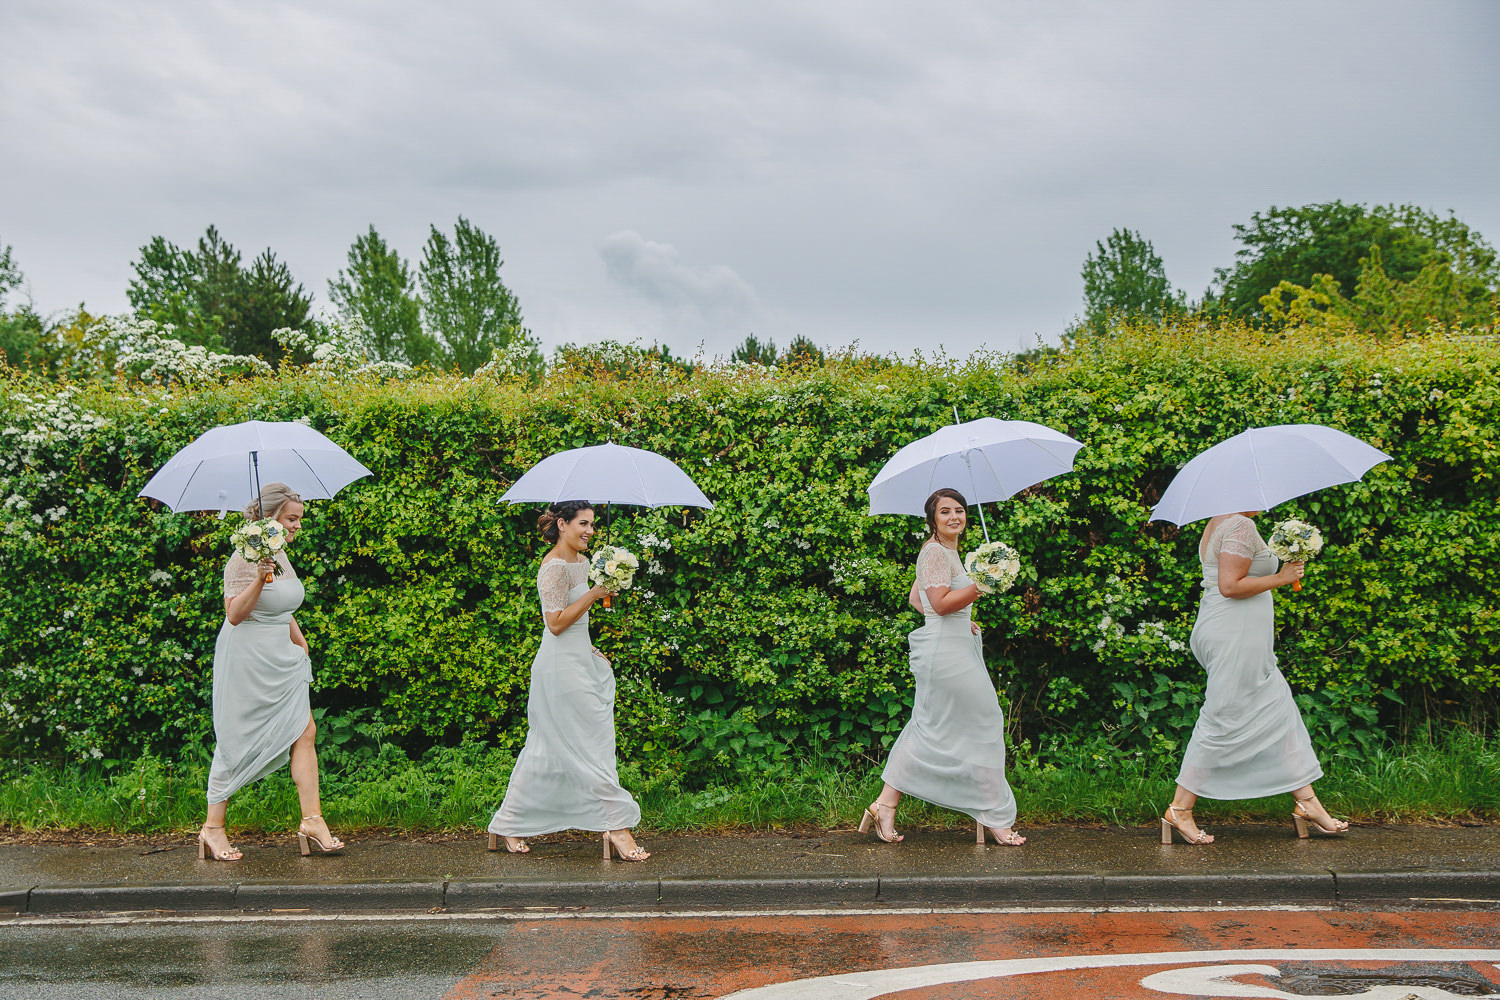 Four brides maids, green dresses, walking